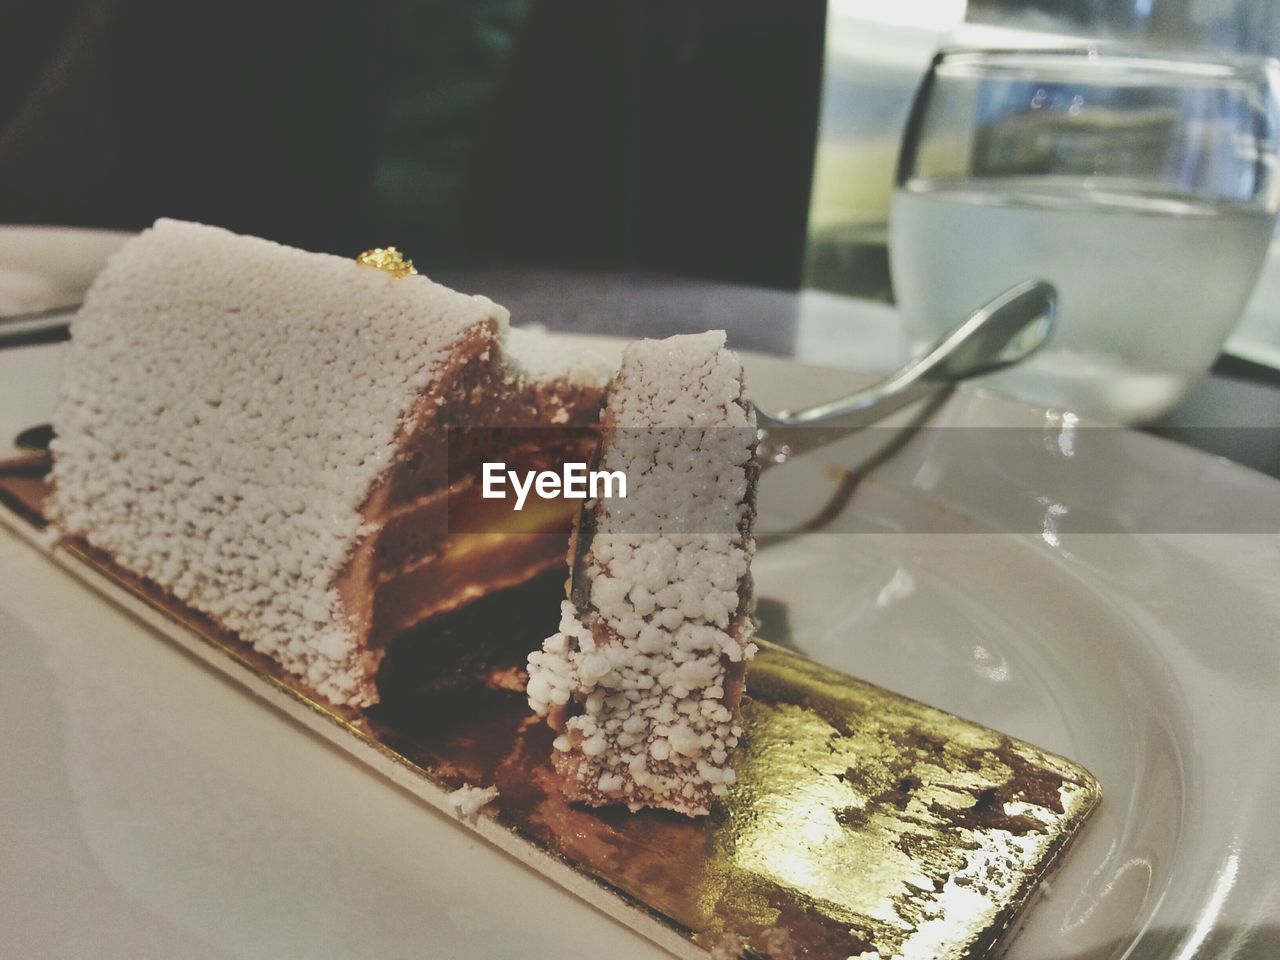 Slice of cake on plate